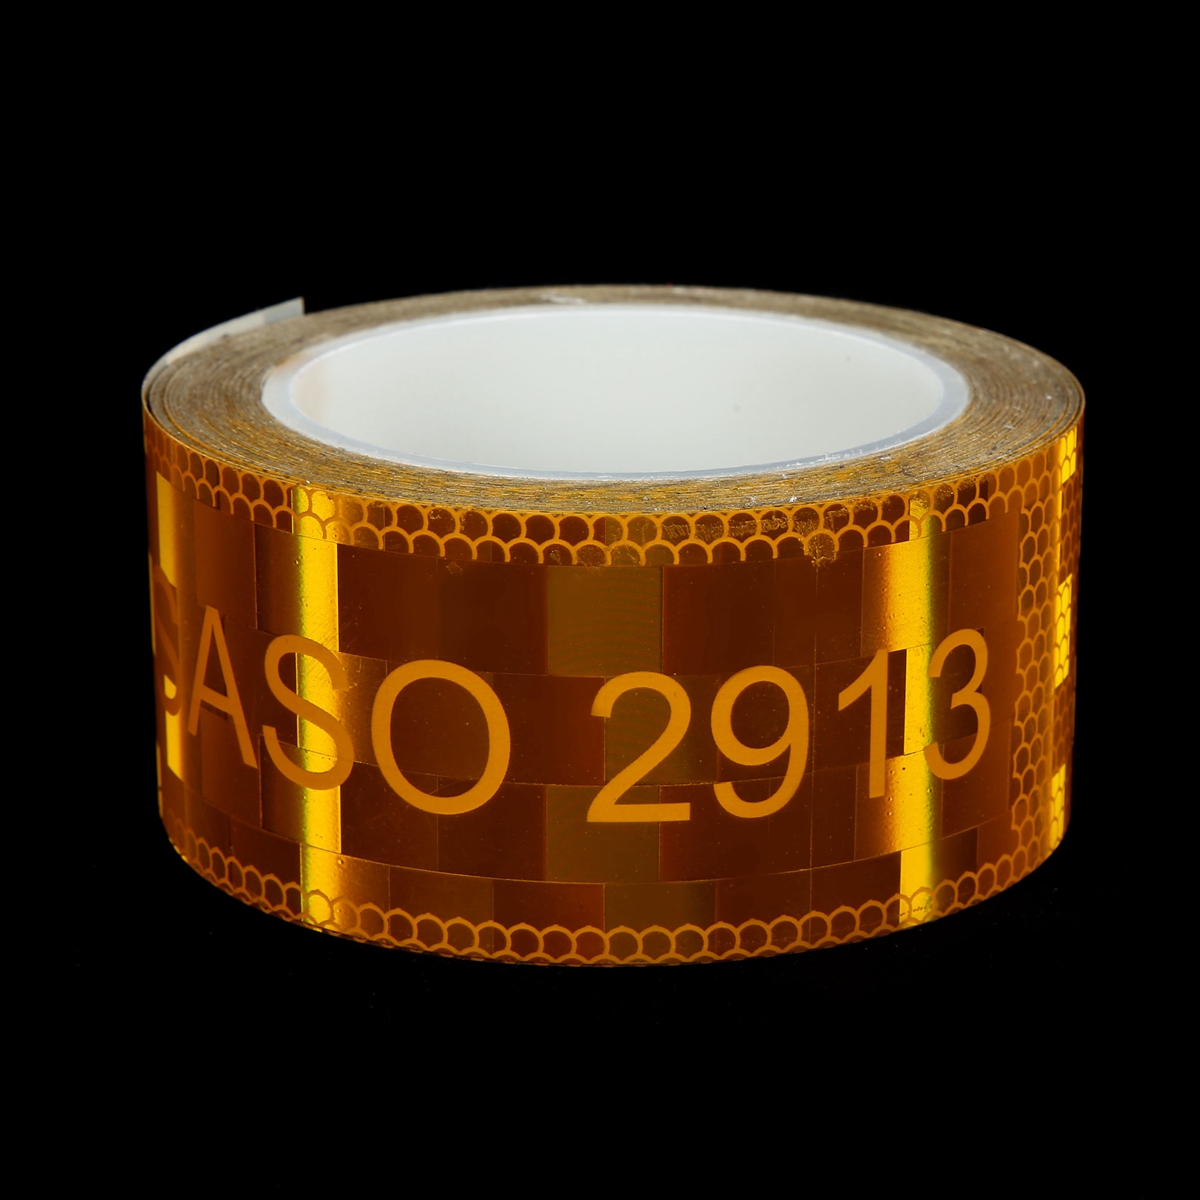 Aluminizing SASO 2913 Reflective Tape for Saudi Arabia